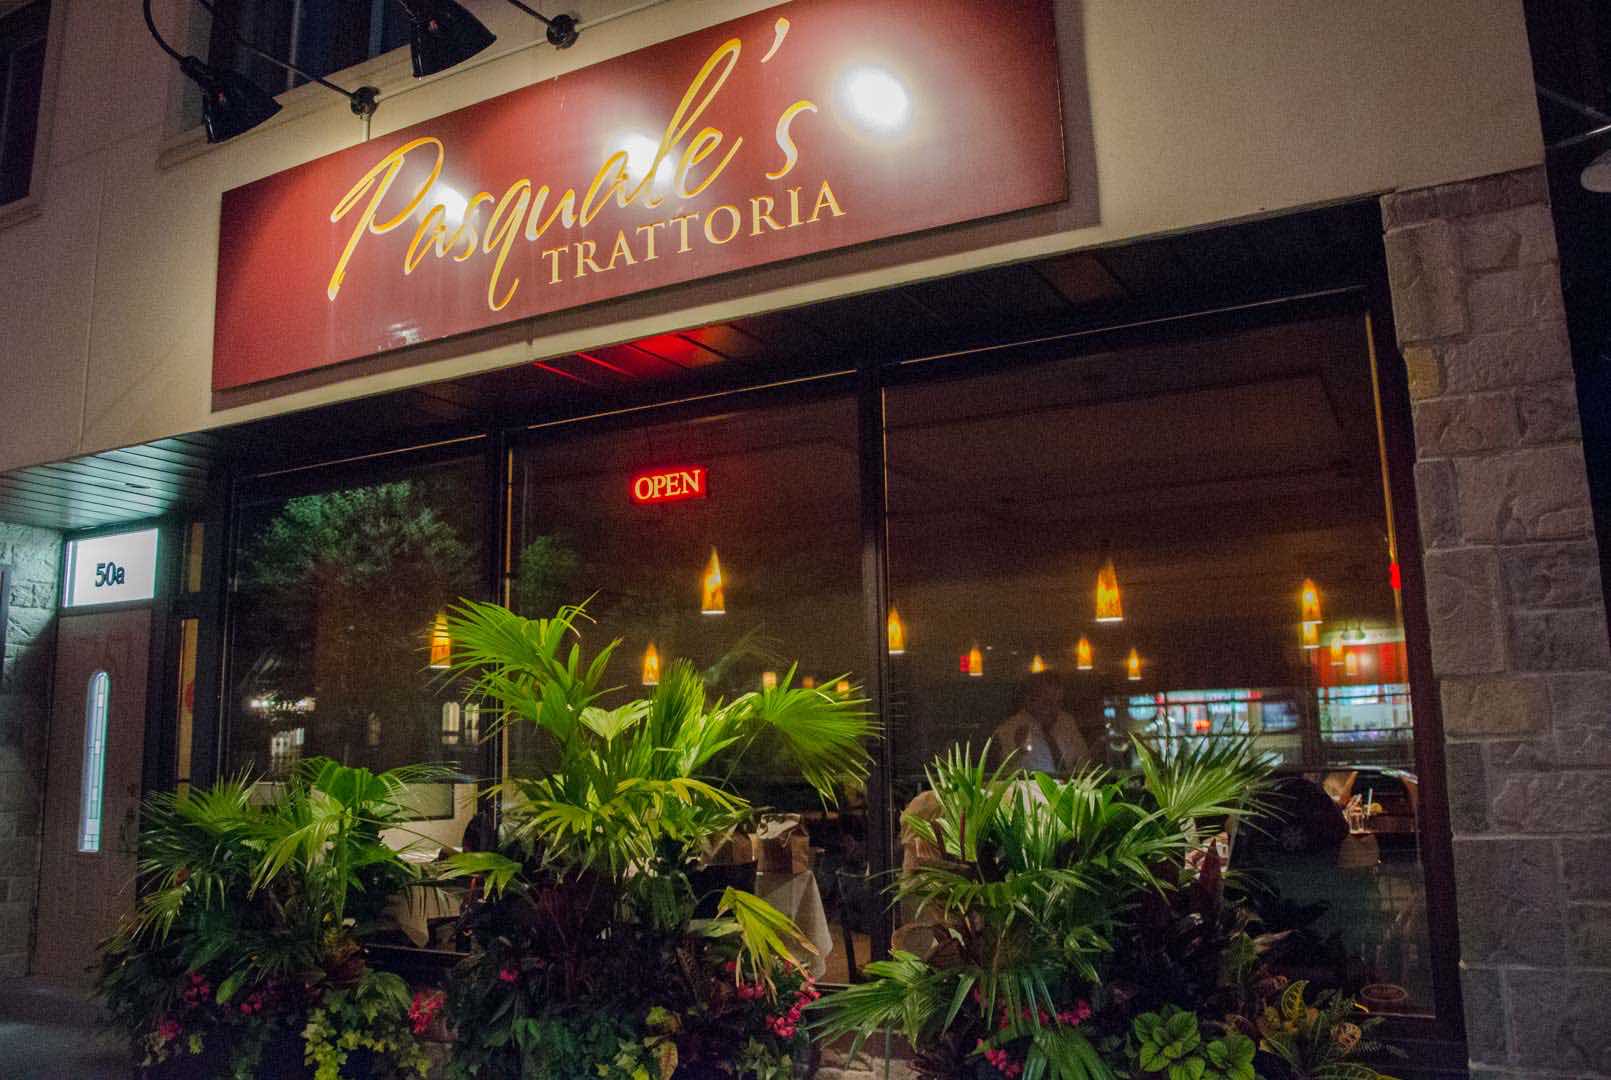 Pasquale's Trattoria oakville restaurants exterior lit up at night